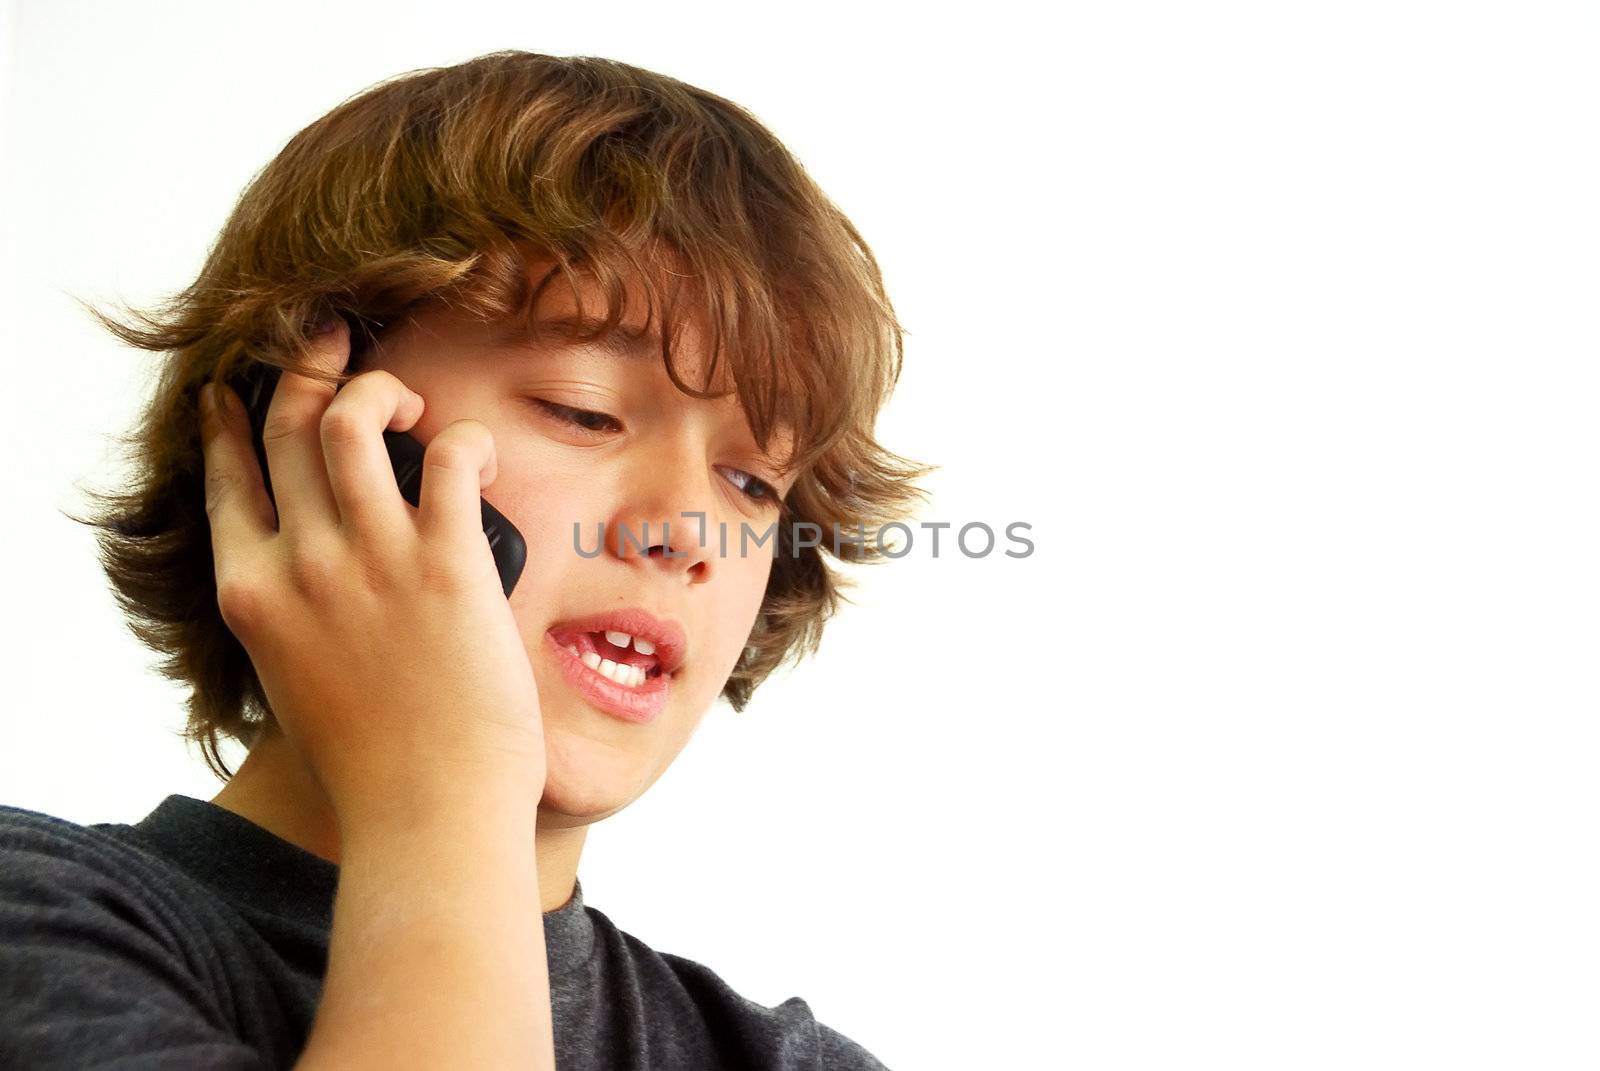 Teenage boy talking on mobile phone isolated on white background.